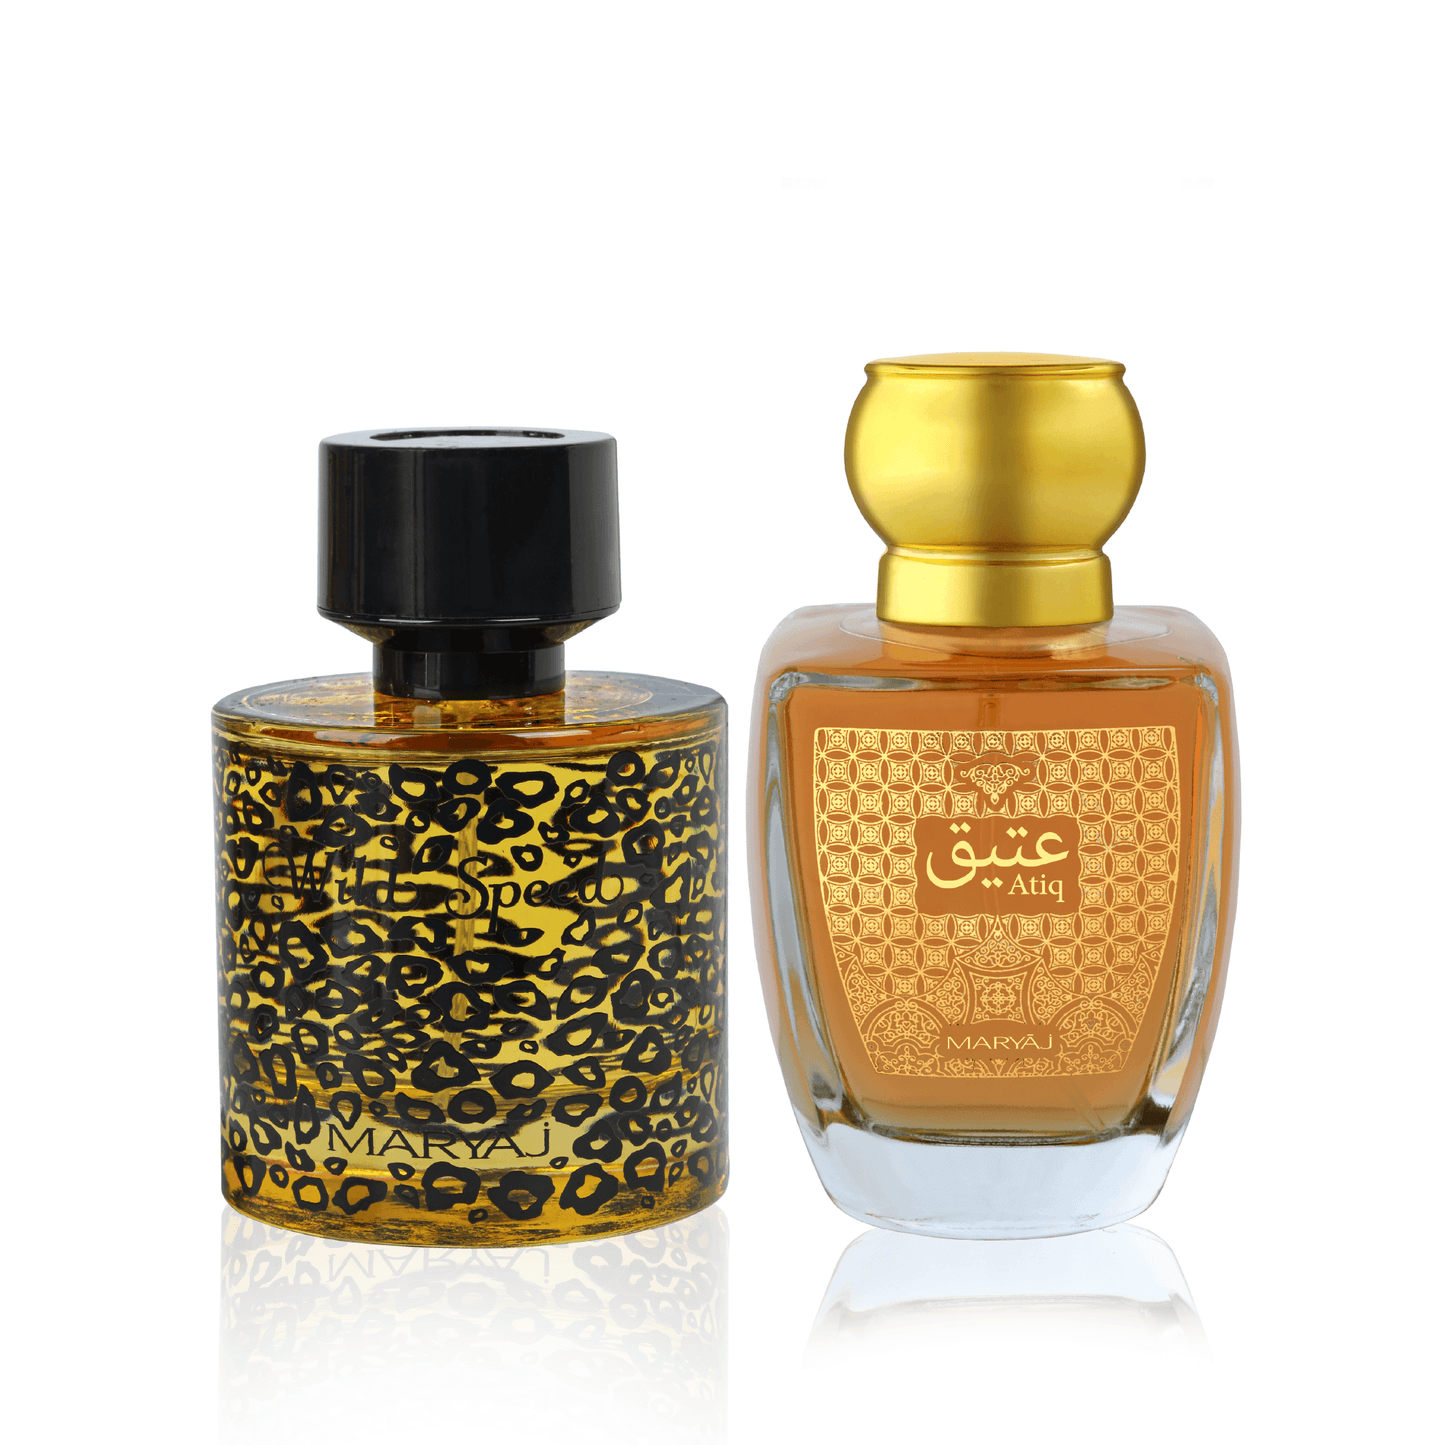 WILD SPEED Eau De Parfum with ATIQ Combo for Unisex, Pack of 2 (100ml each)